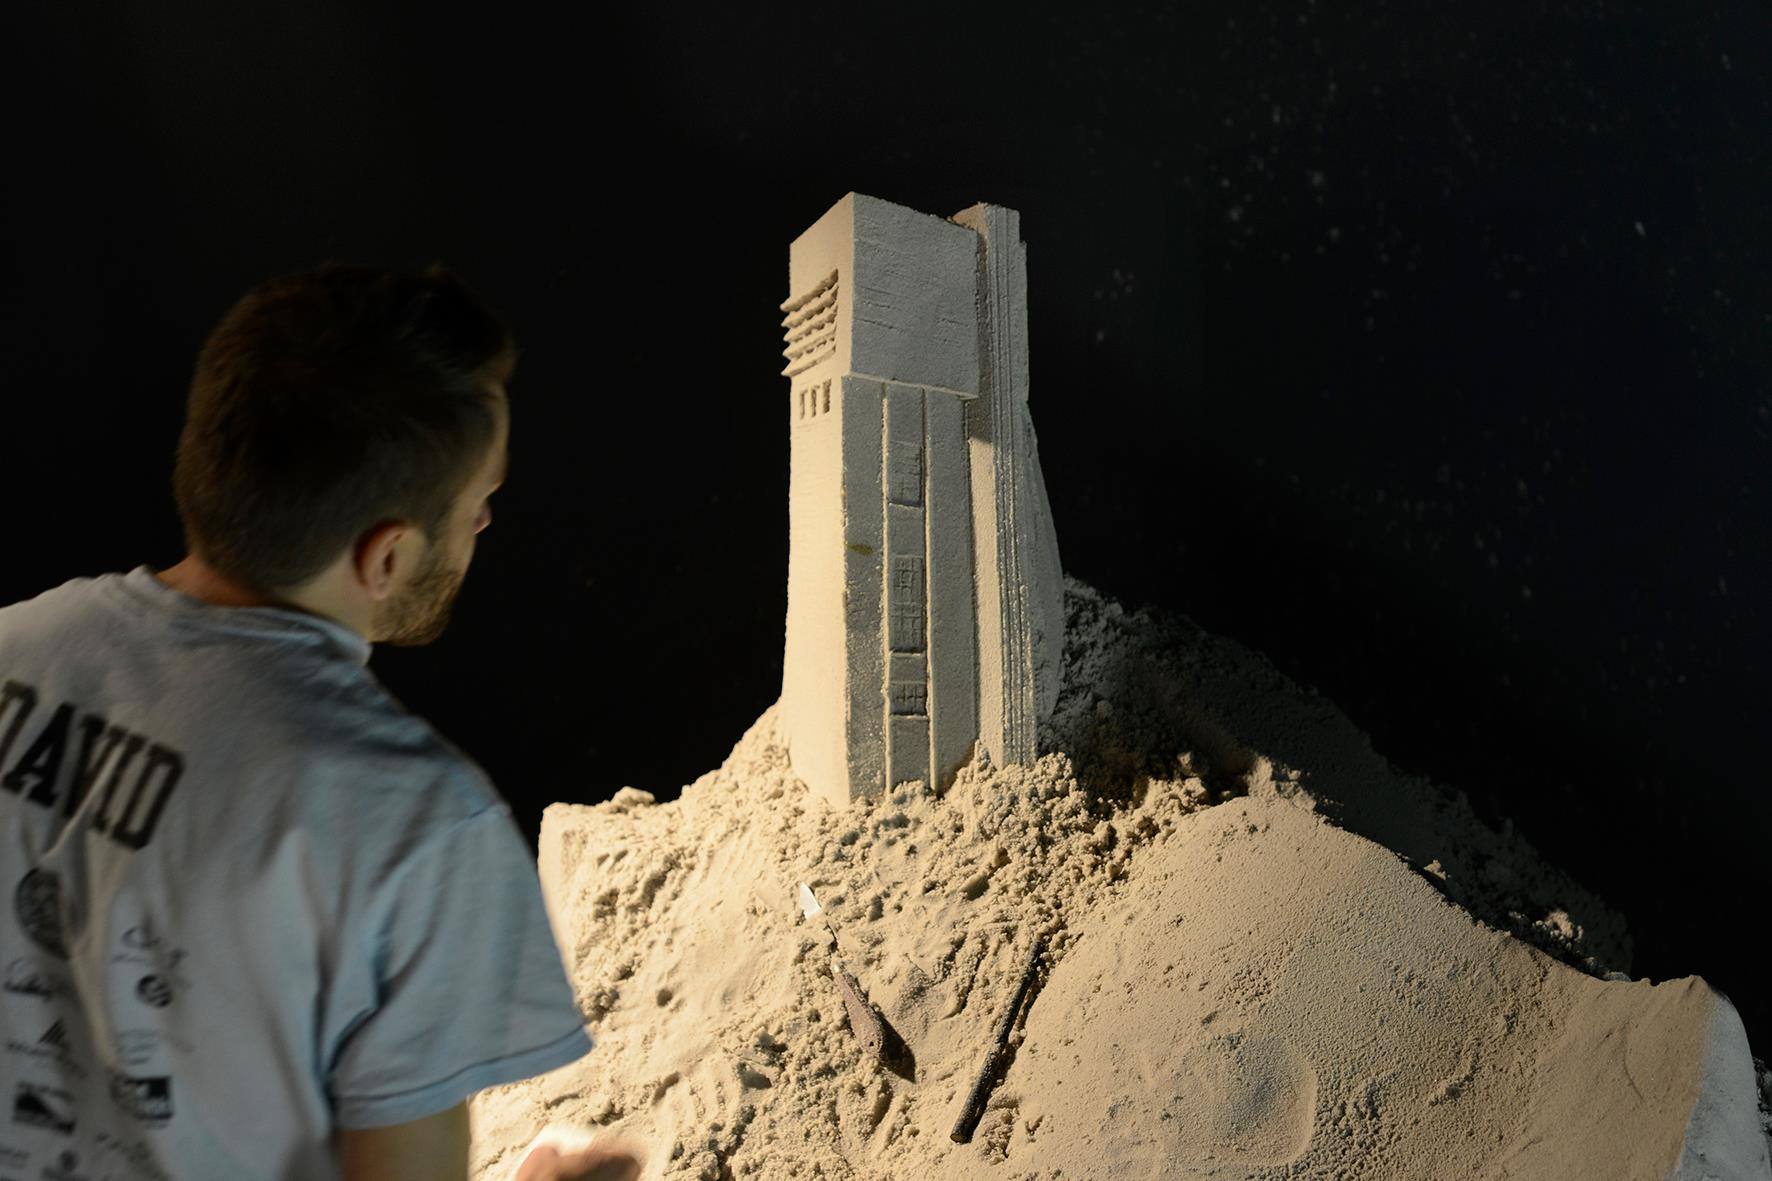 Enguerrand David working on his sand sculpture